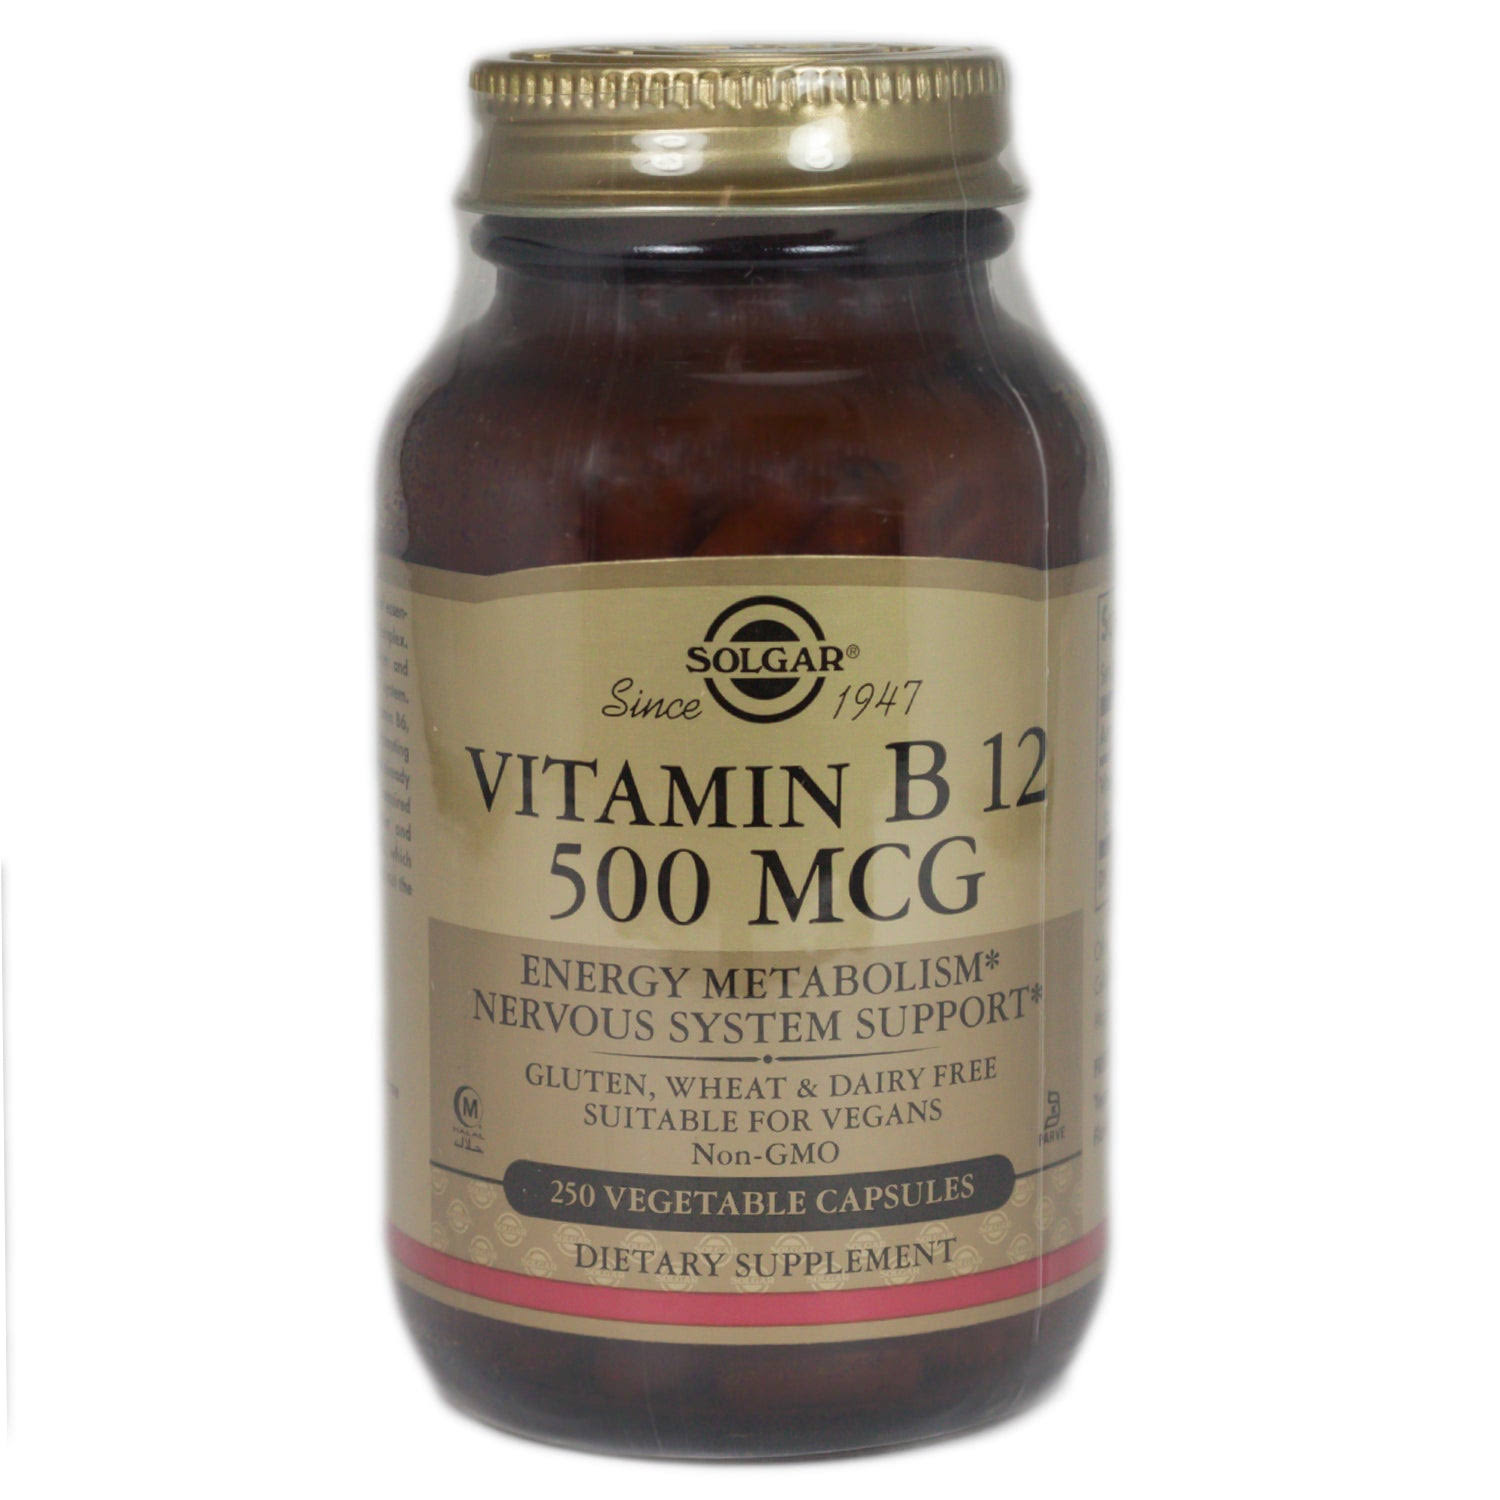 Solgar Vitamin B-12 Dietary Supplement - 500mcg, 250 Vegetable Capsules